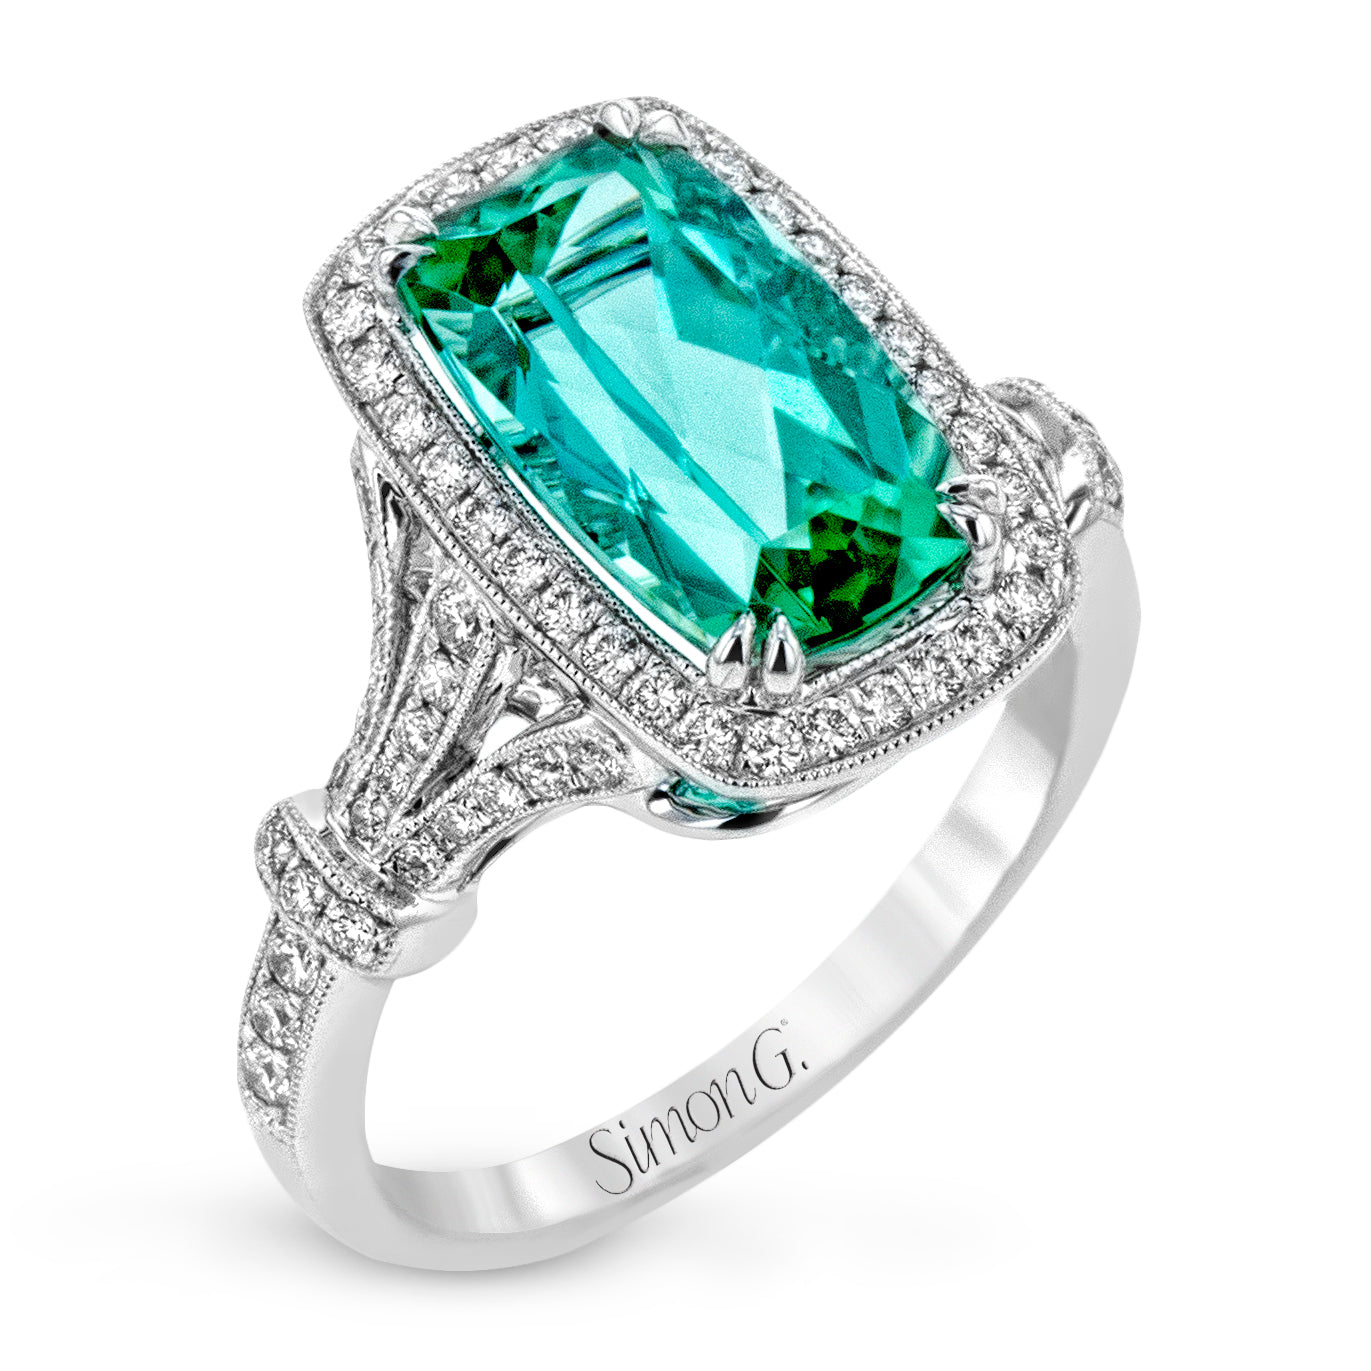 Simon G "Rare" Mint Green Tourmaline Ring